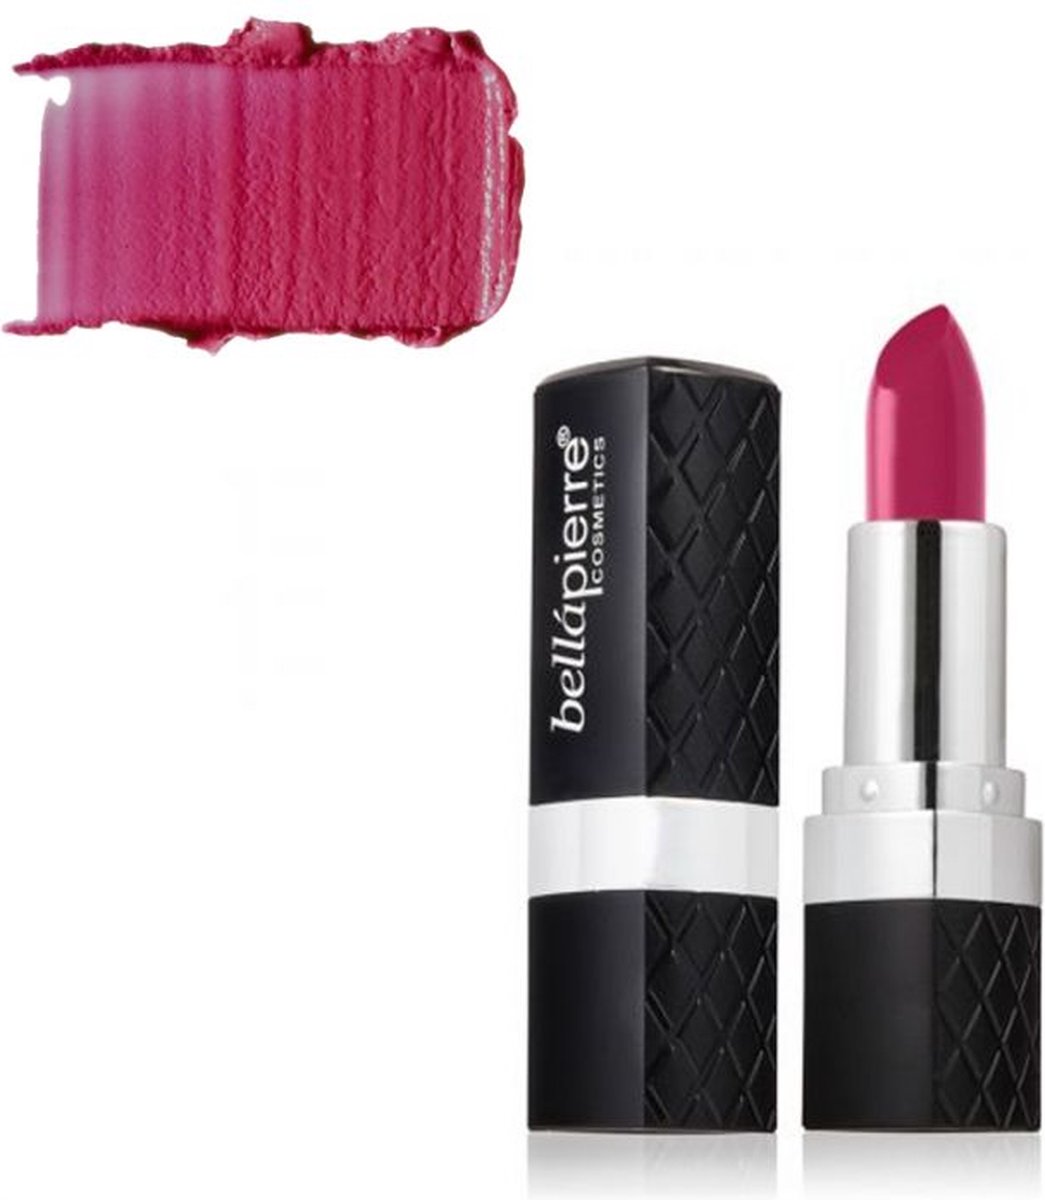 Bellapierre Mineral lipstick - Burlesque